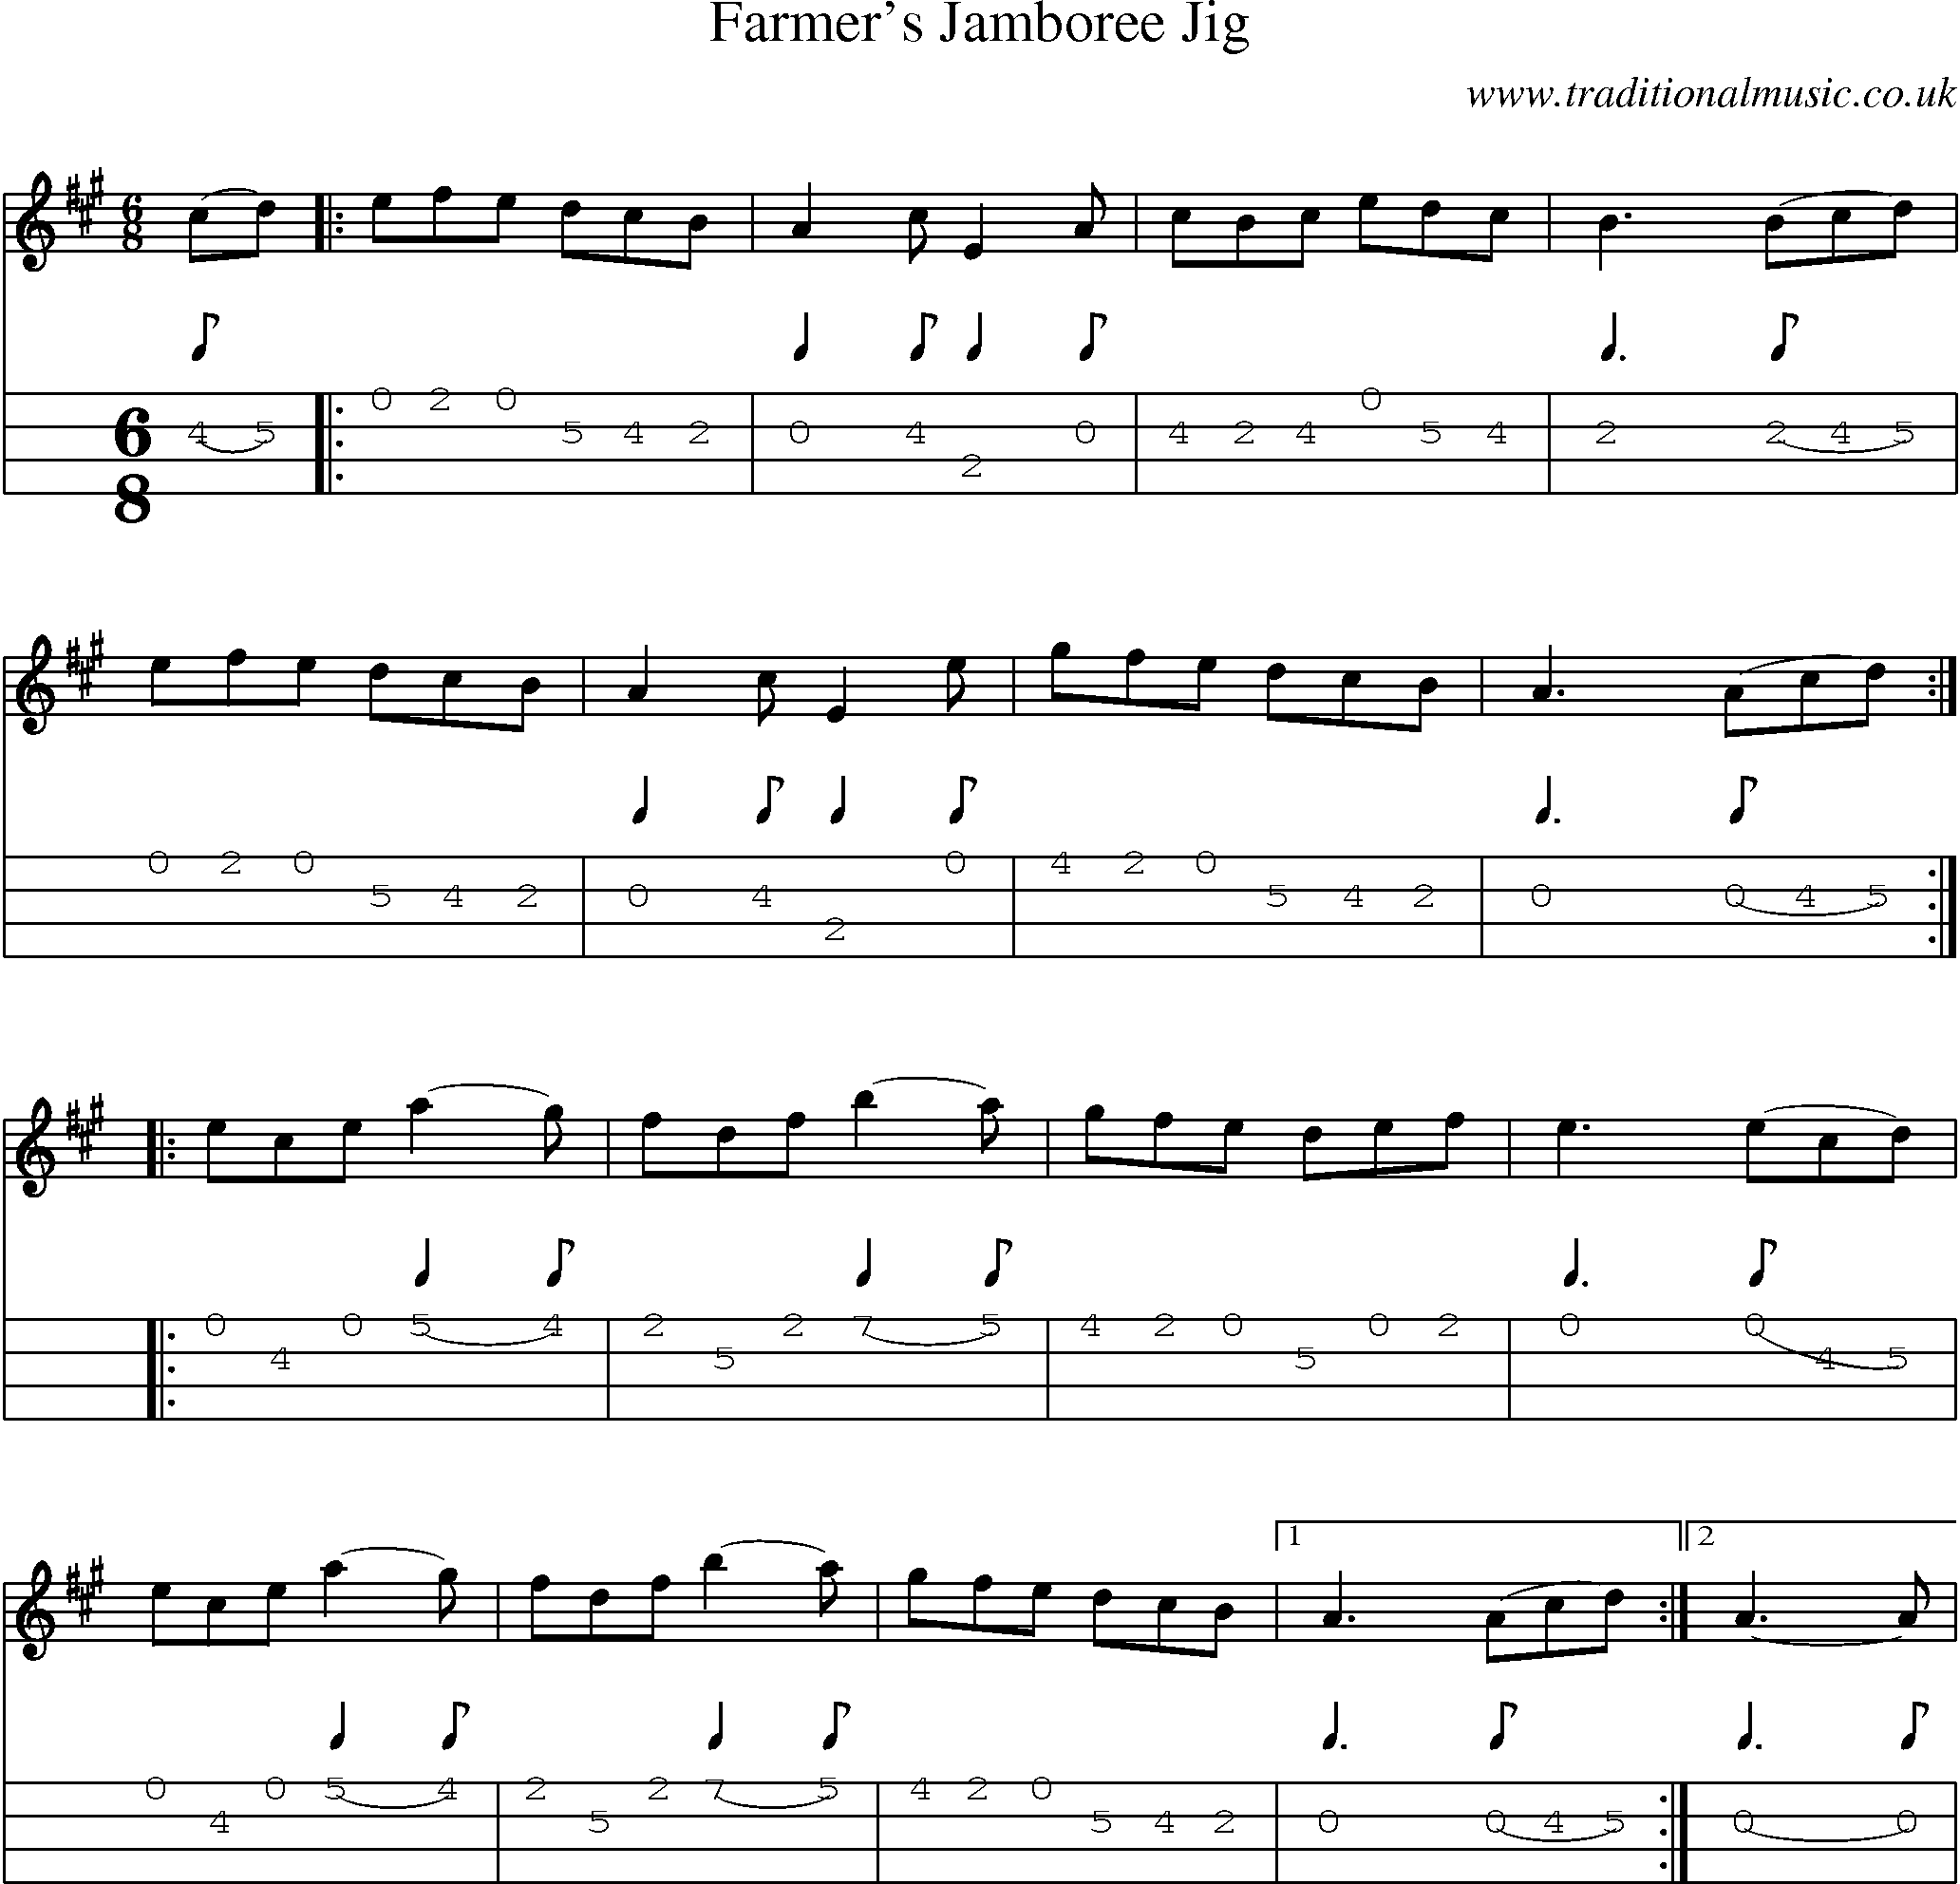 Music Score and Mandolin Tabs for Farmers Jamboree Jig